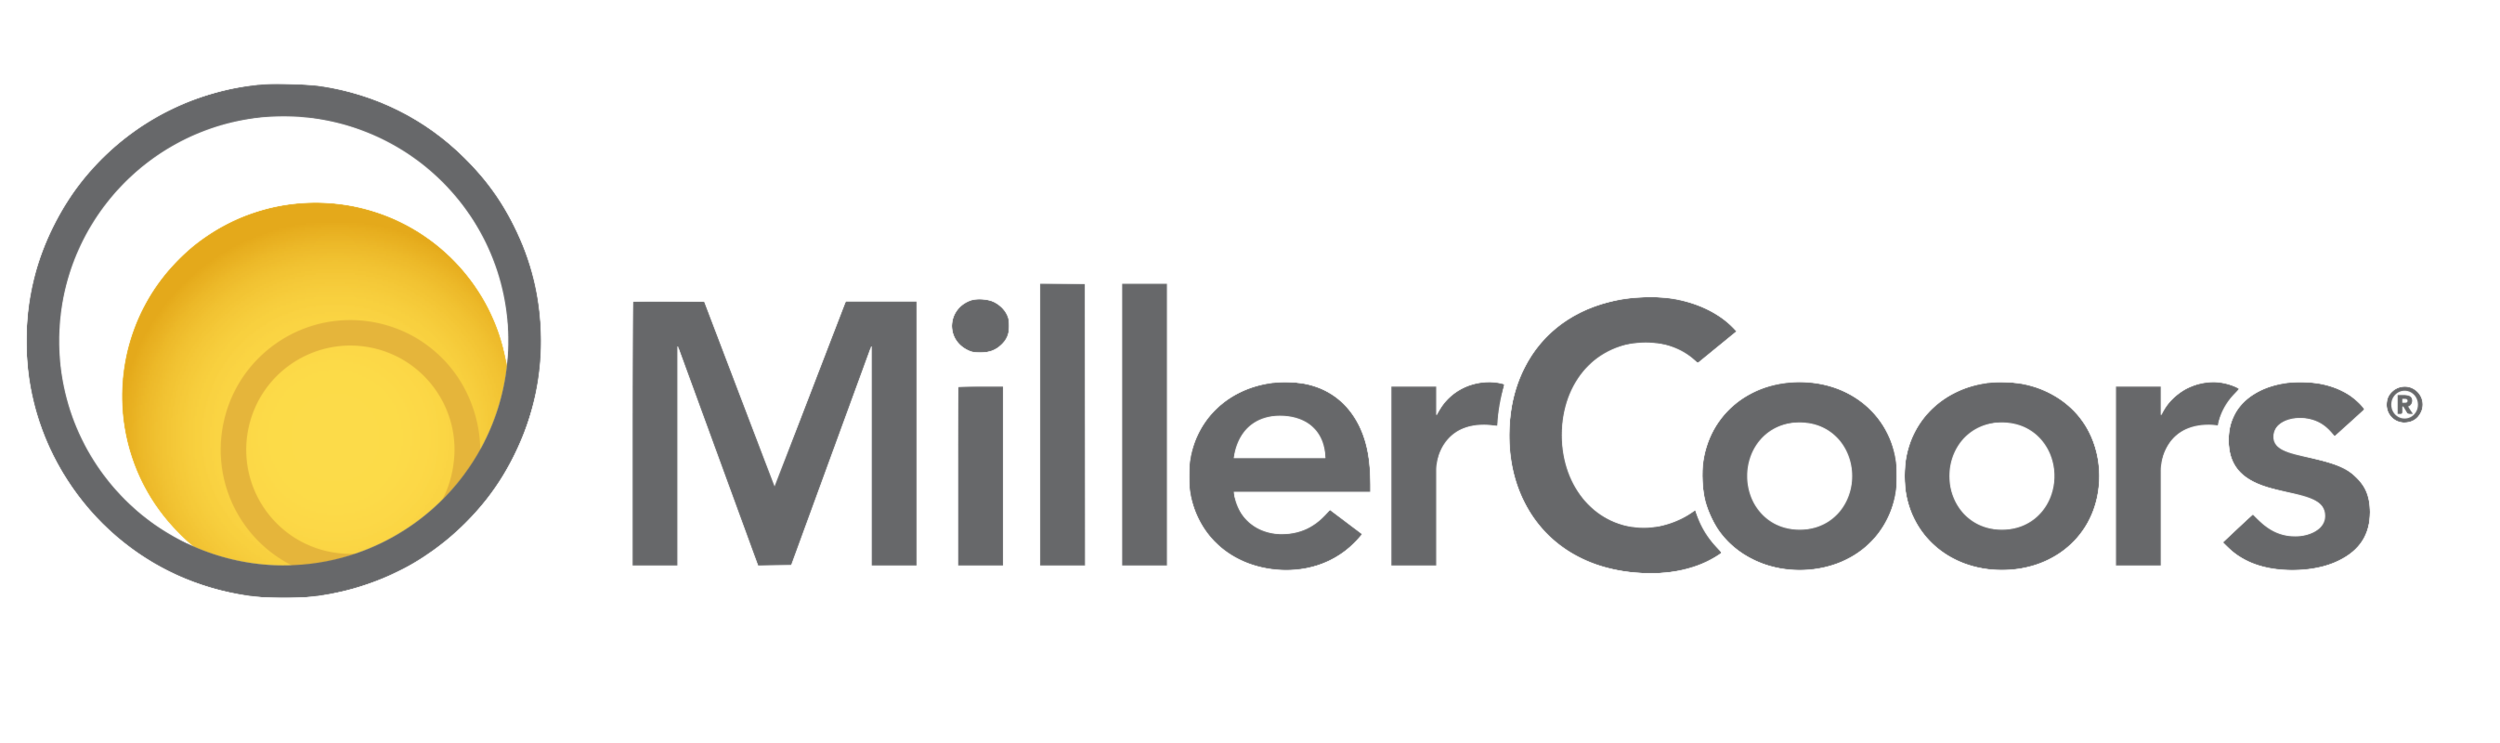 MillerCoors-Logo.png